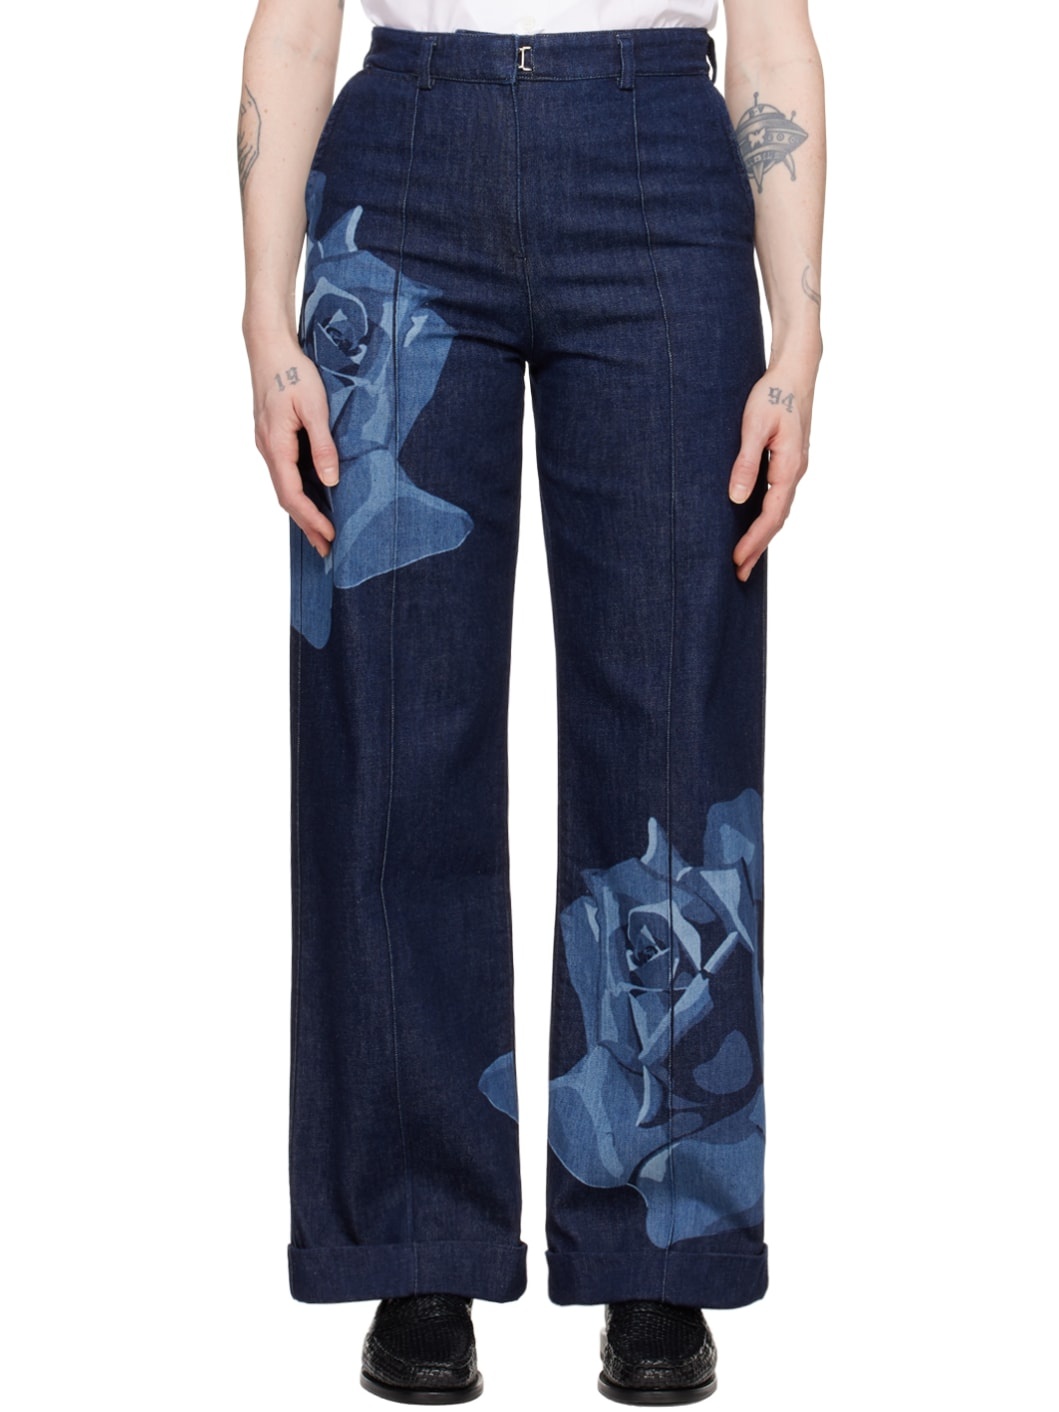 Indigo Kenzo Paris Rose Tailored Jeans - 1